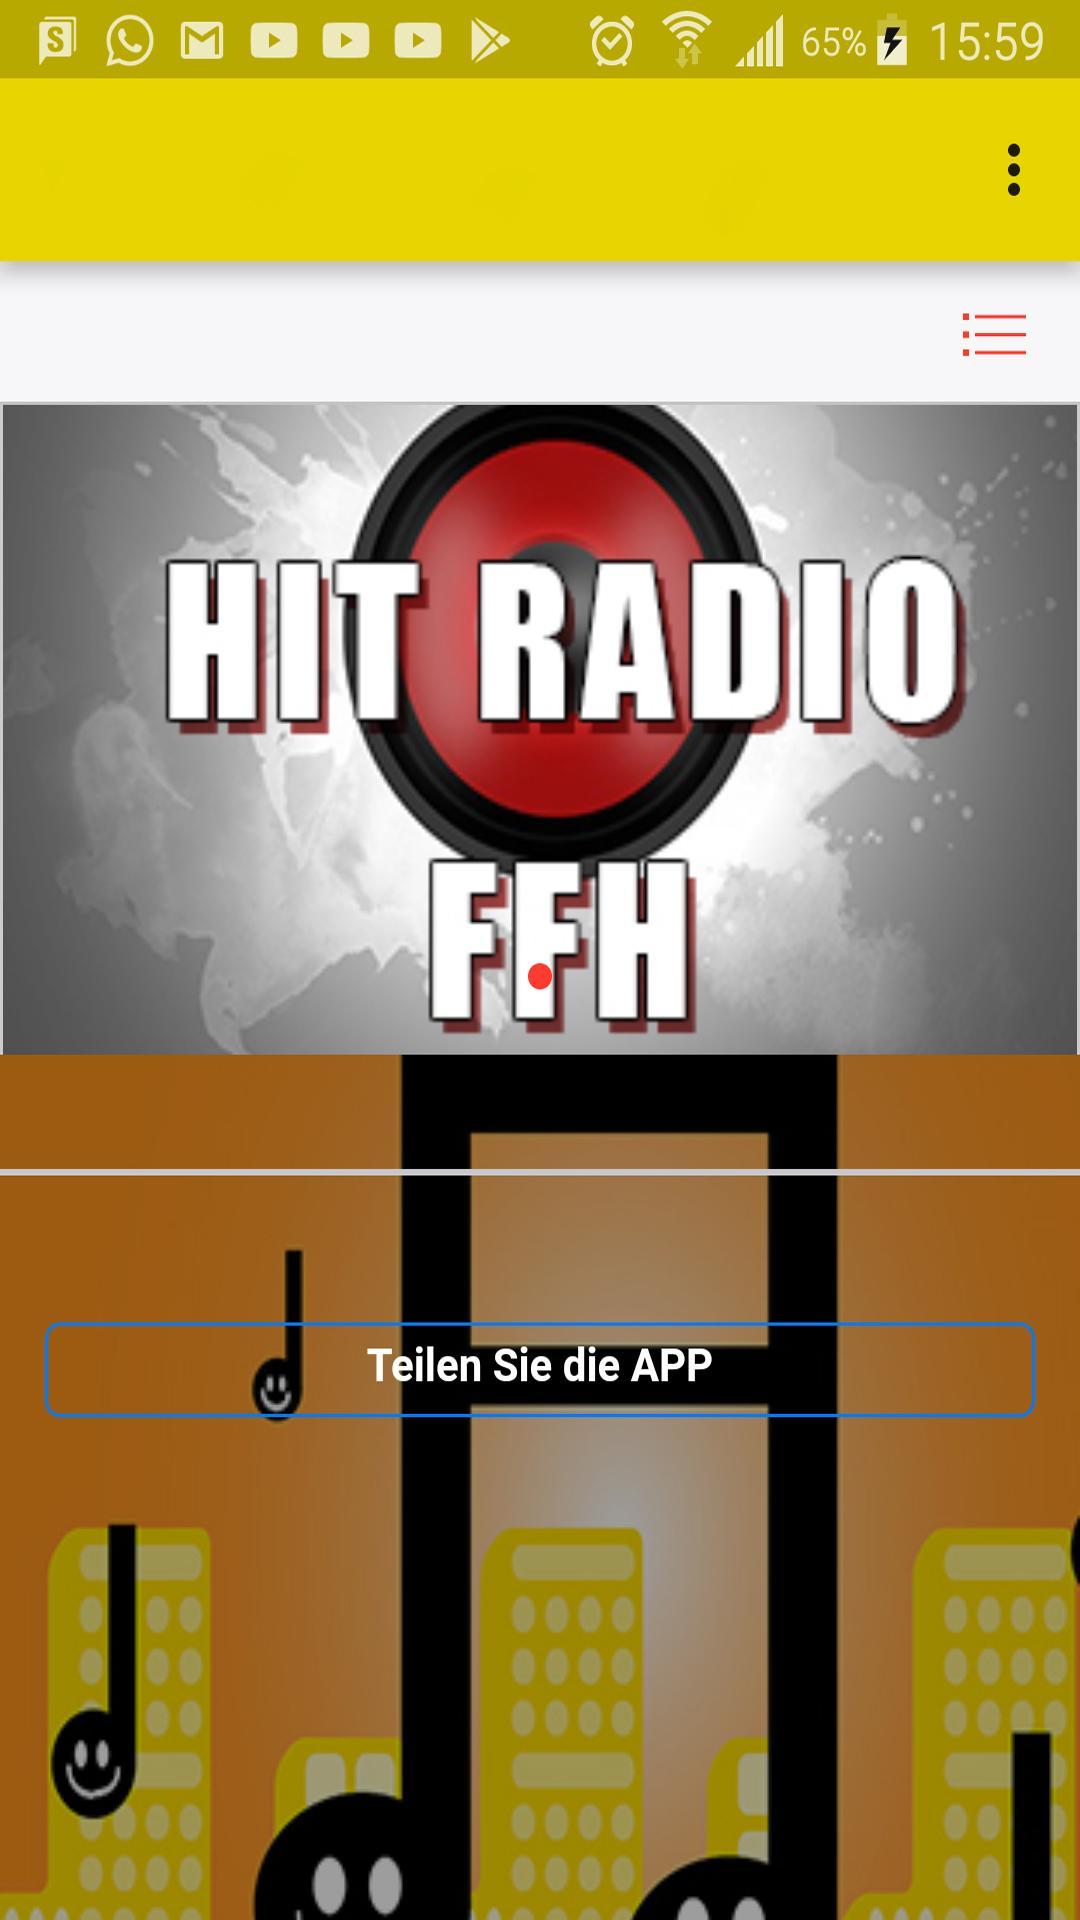 Radio Ffh Hit Radio Ffh Radio Online Ffh Rock FM for Android - APK Download